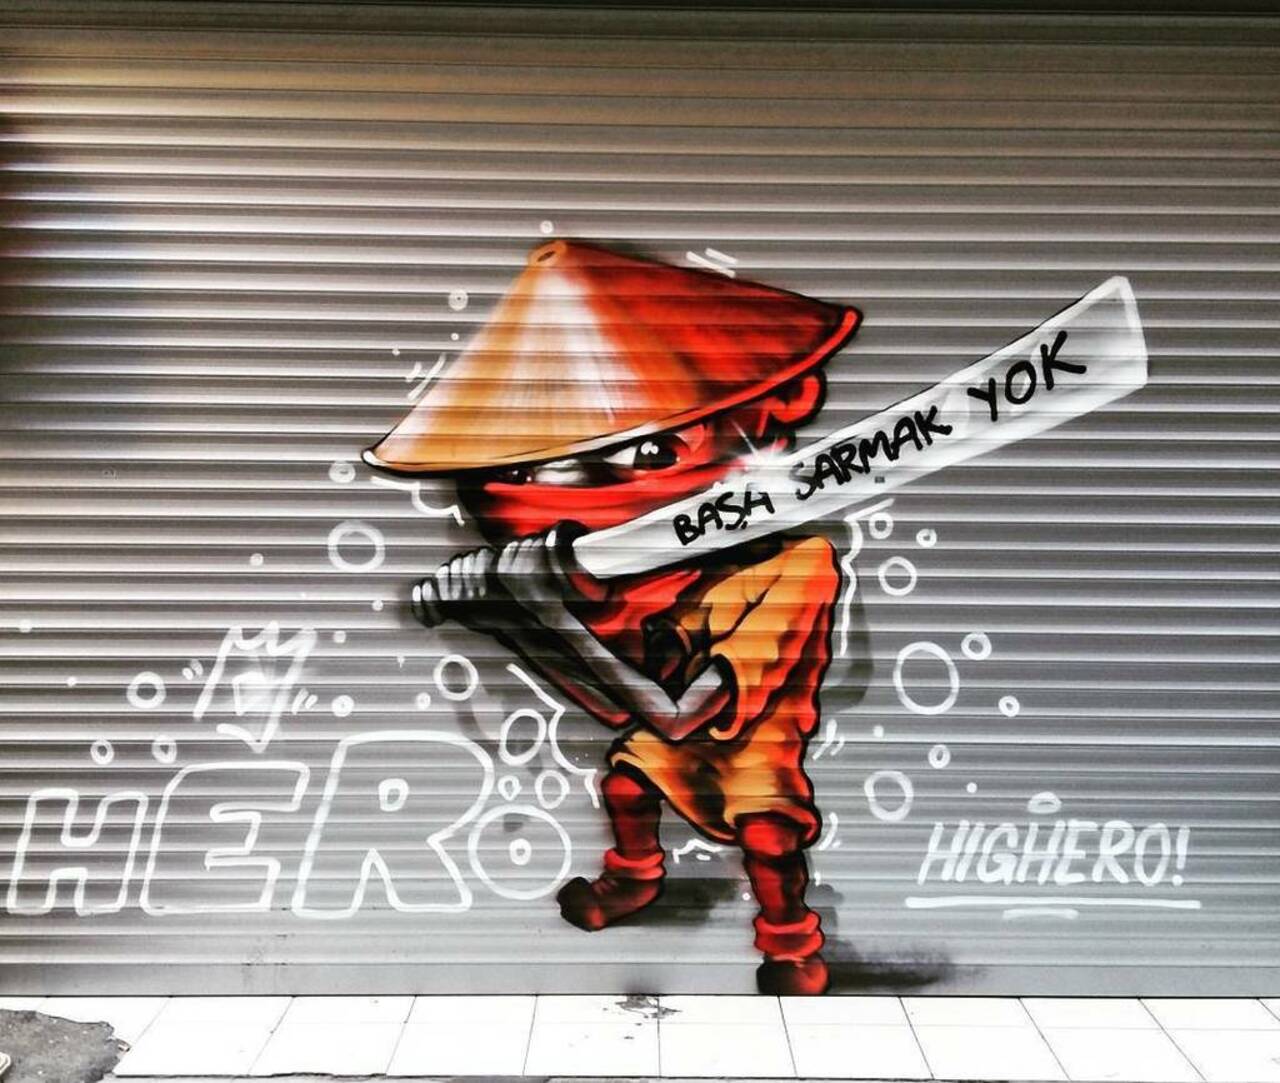 By @highero @dsb_graff #dsb_graff @rsa_graffiti @streetawesome #streetart #urbanart #graffitiart #graffiti #streeta… https://t.co/whWLNs2apE